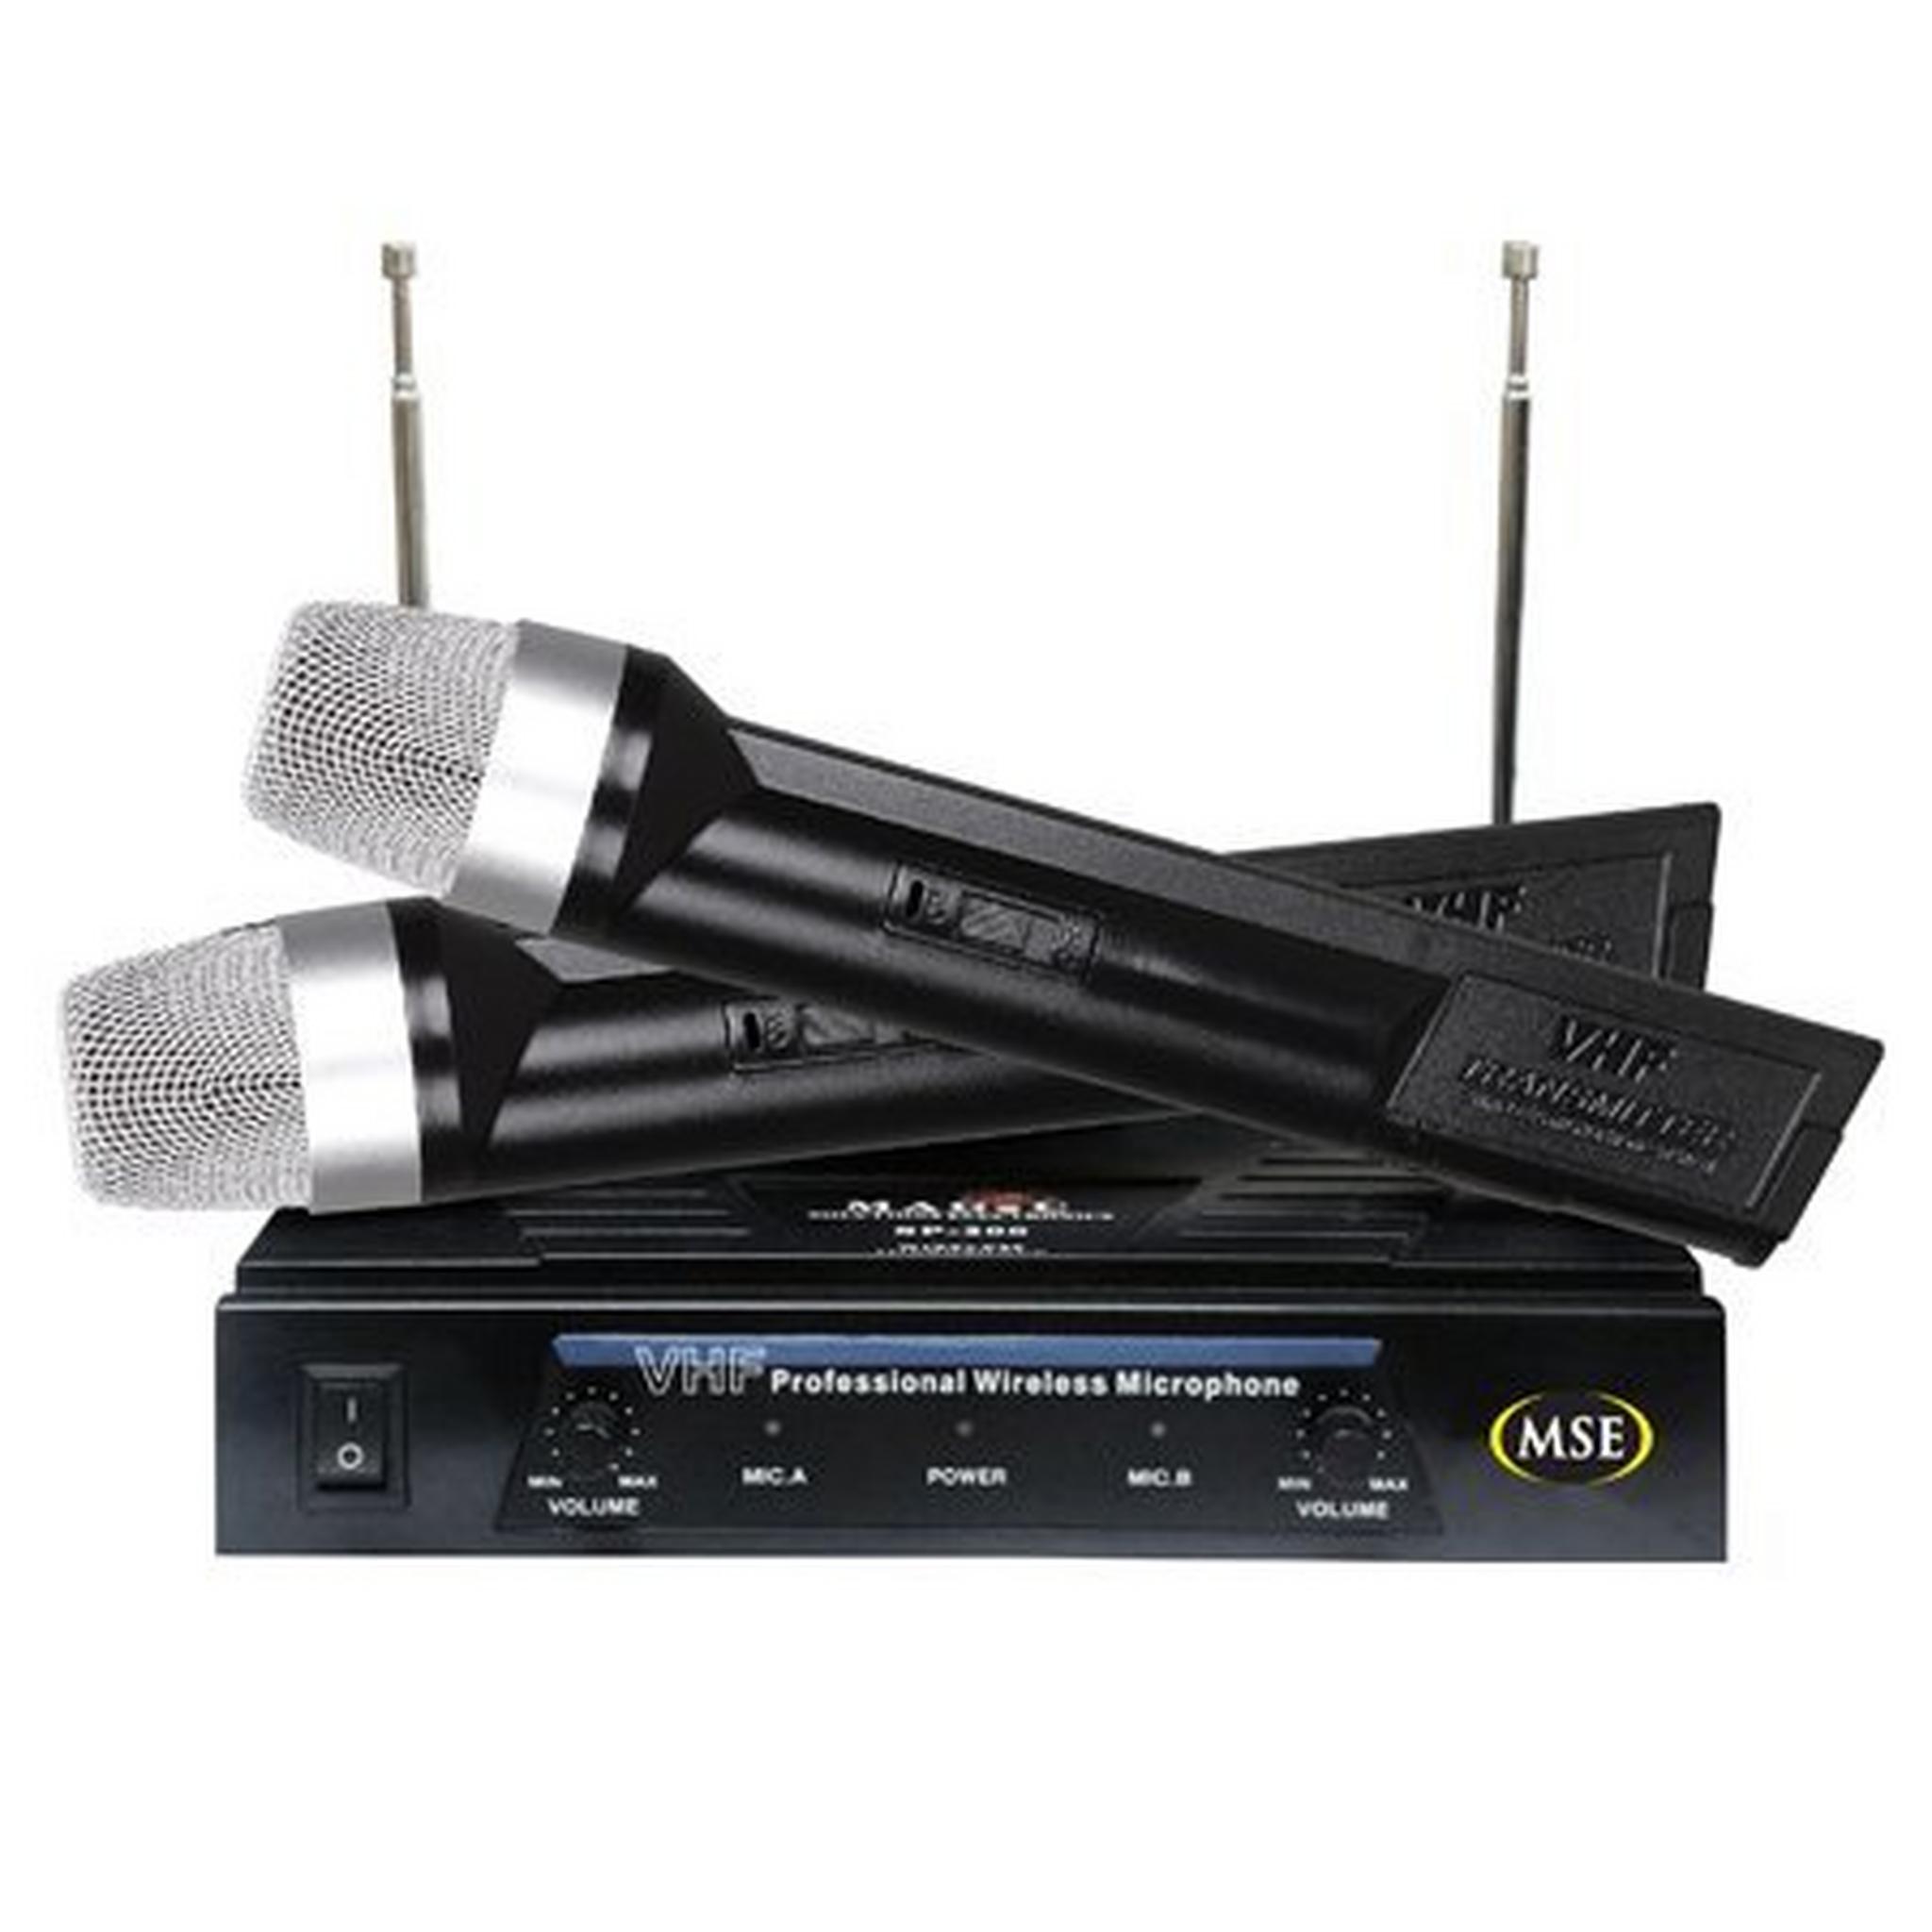 Magic Star SP200 Professional Wireless Microphone System - Black